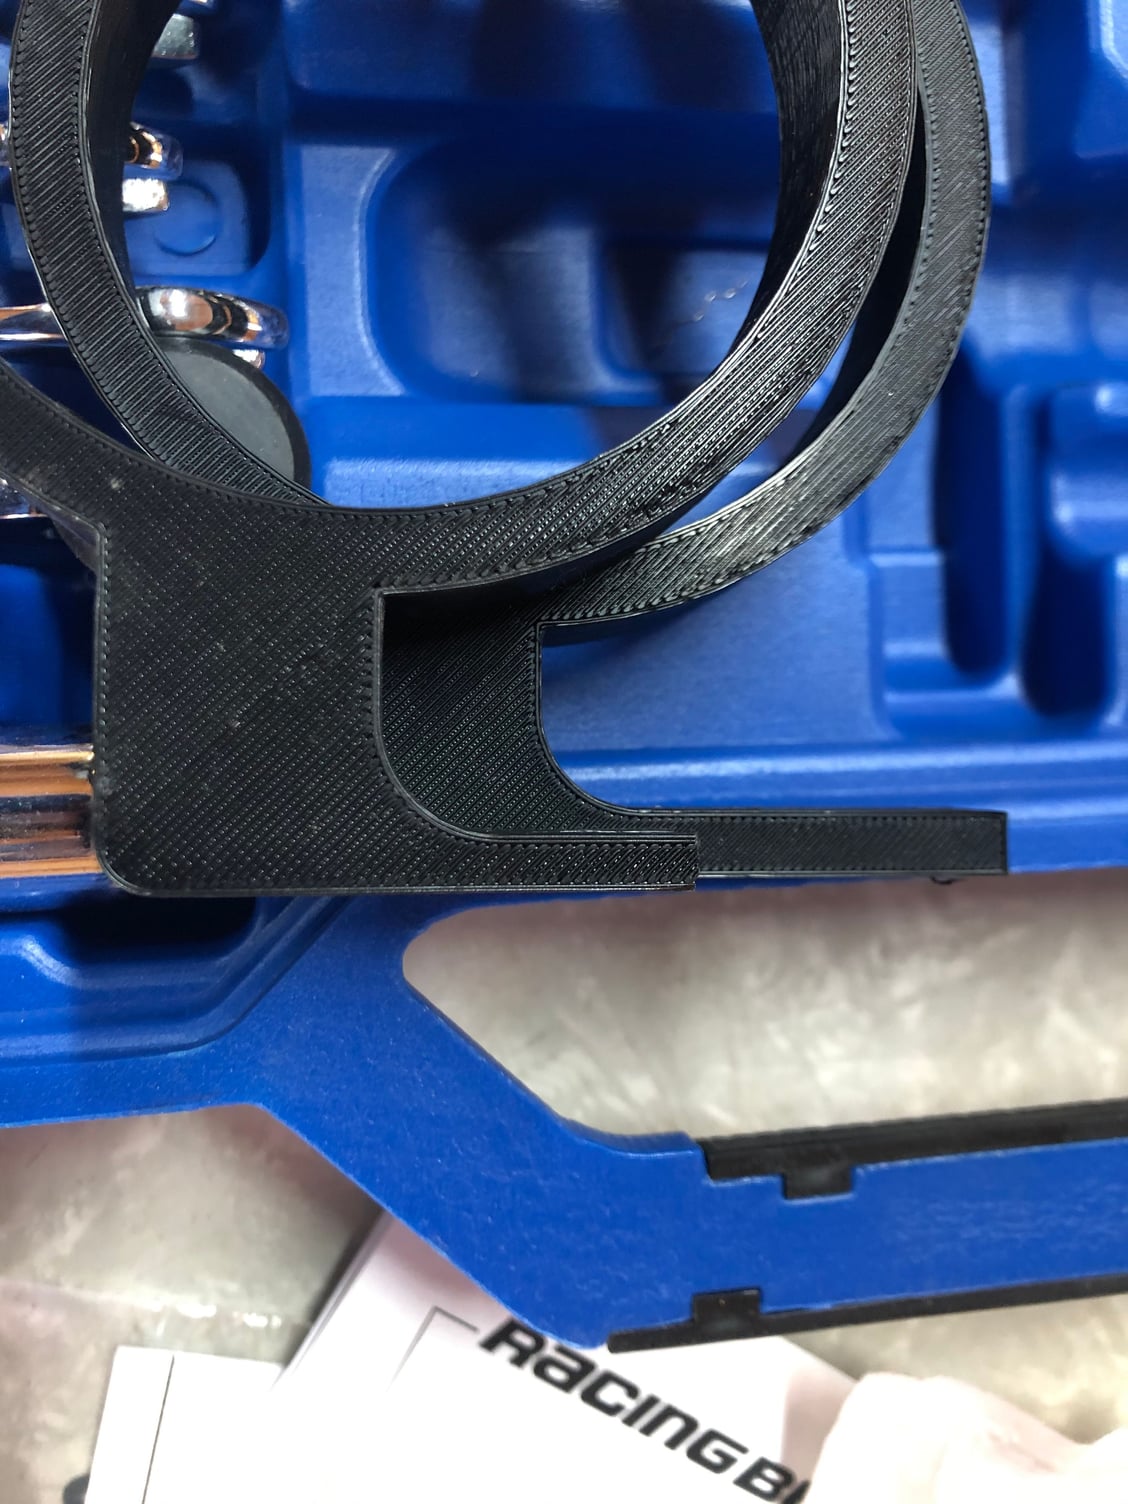 Darkside Grip Pad Set - Onewheel GT and Onewheel GT-S Compatible